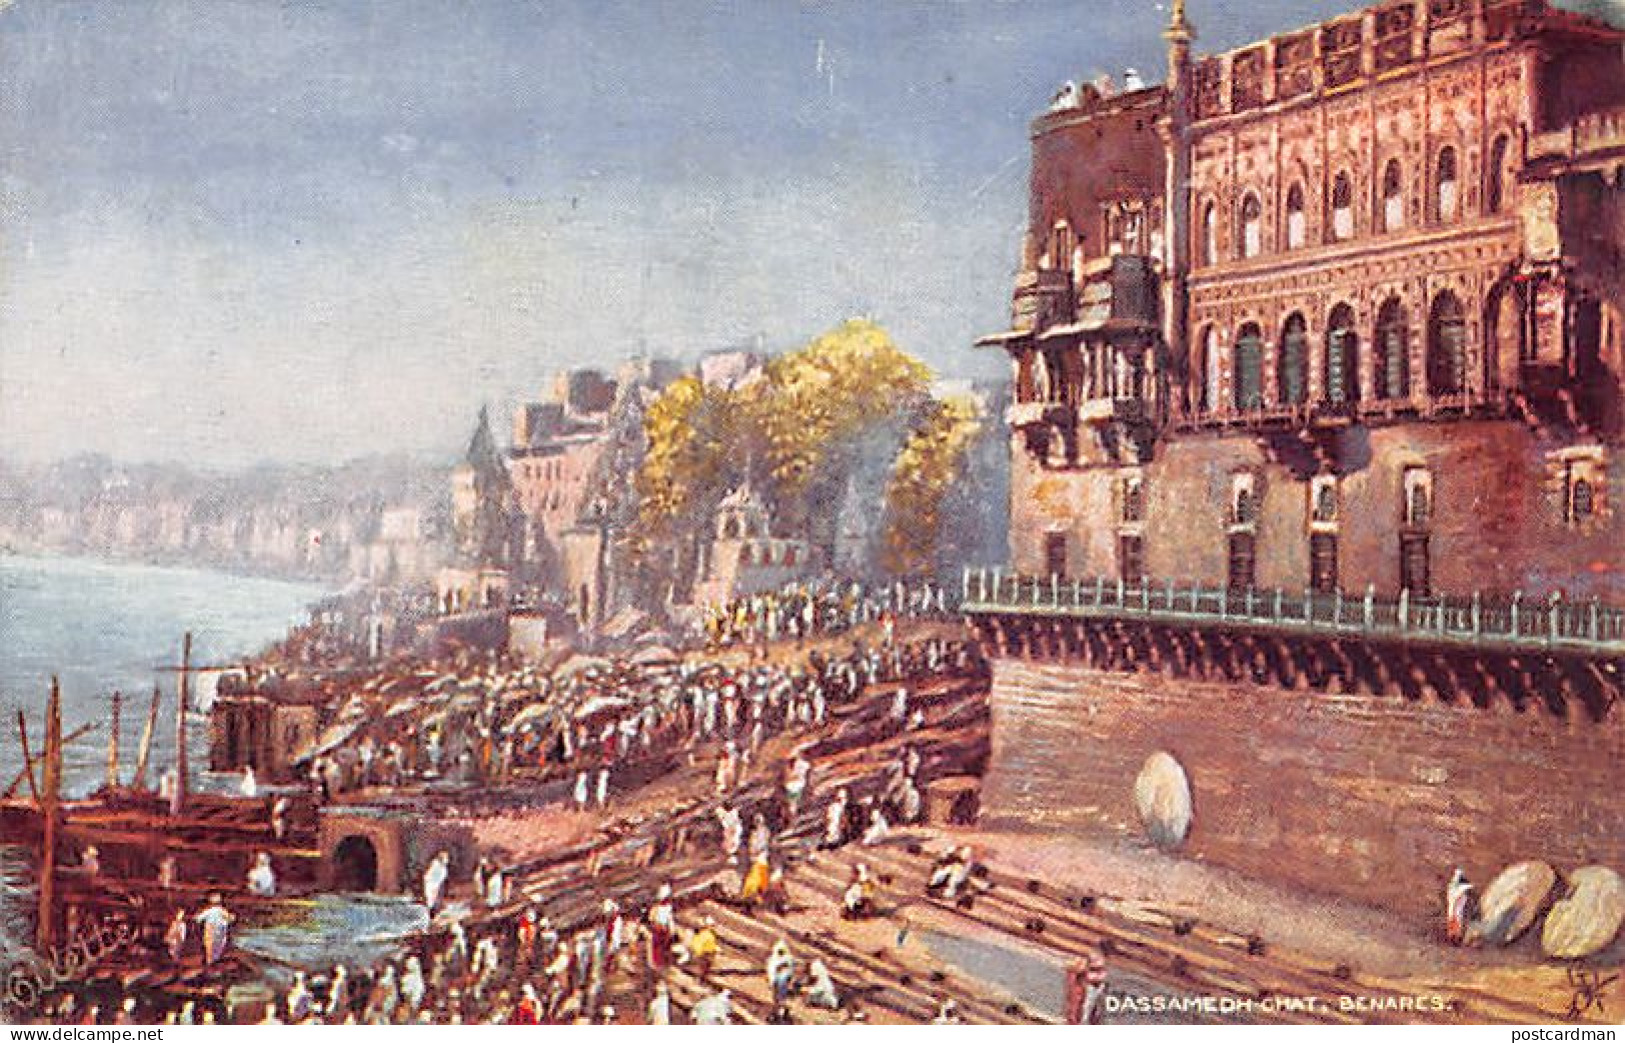 India - VARANASI Benares - Dassamedh Ghat - Publ. Raphael Tuck & Sons - Inde